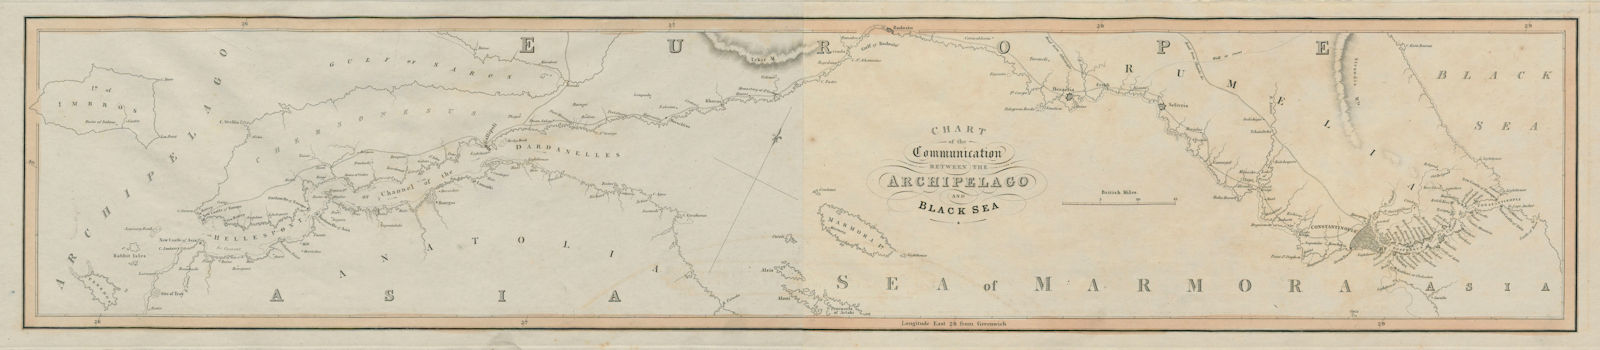 Communication between the Archipelago & Black Sea. Aegean Turkey LIZARS 1842 map